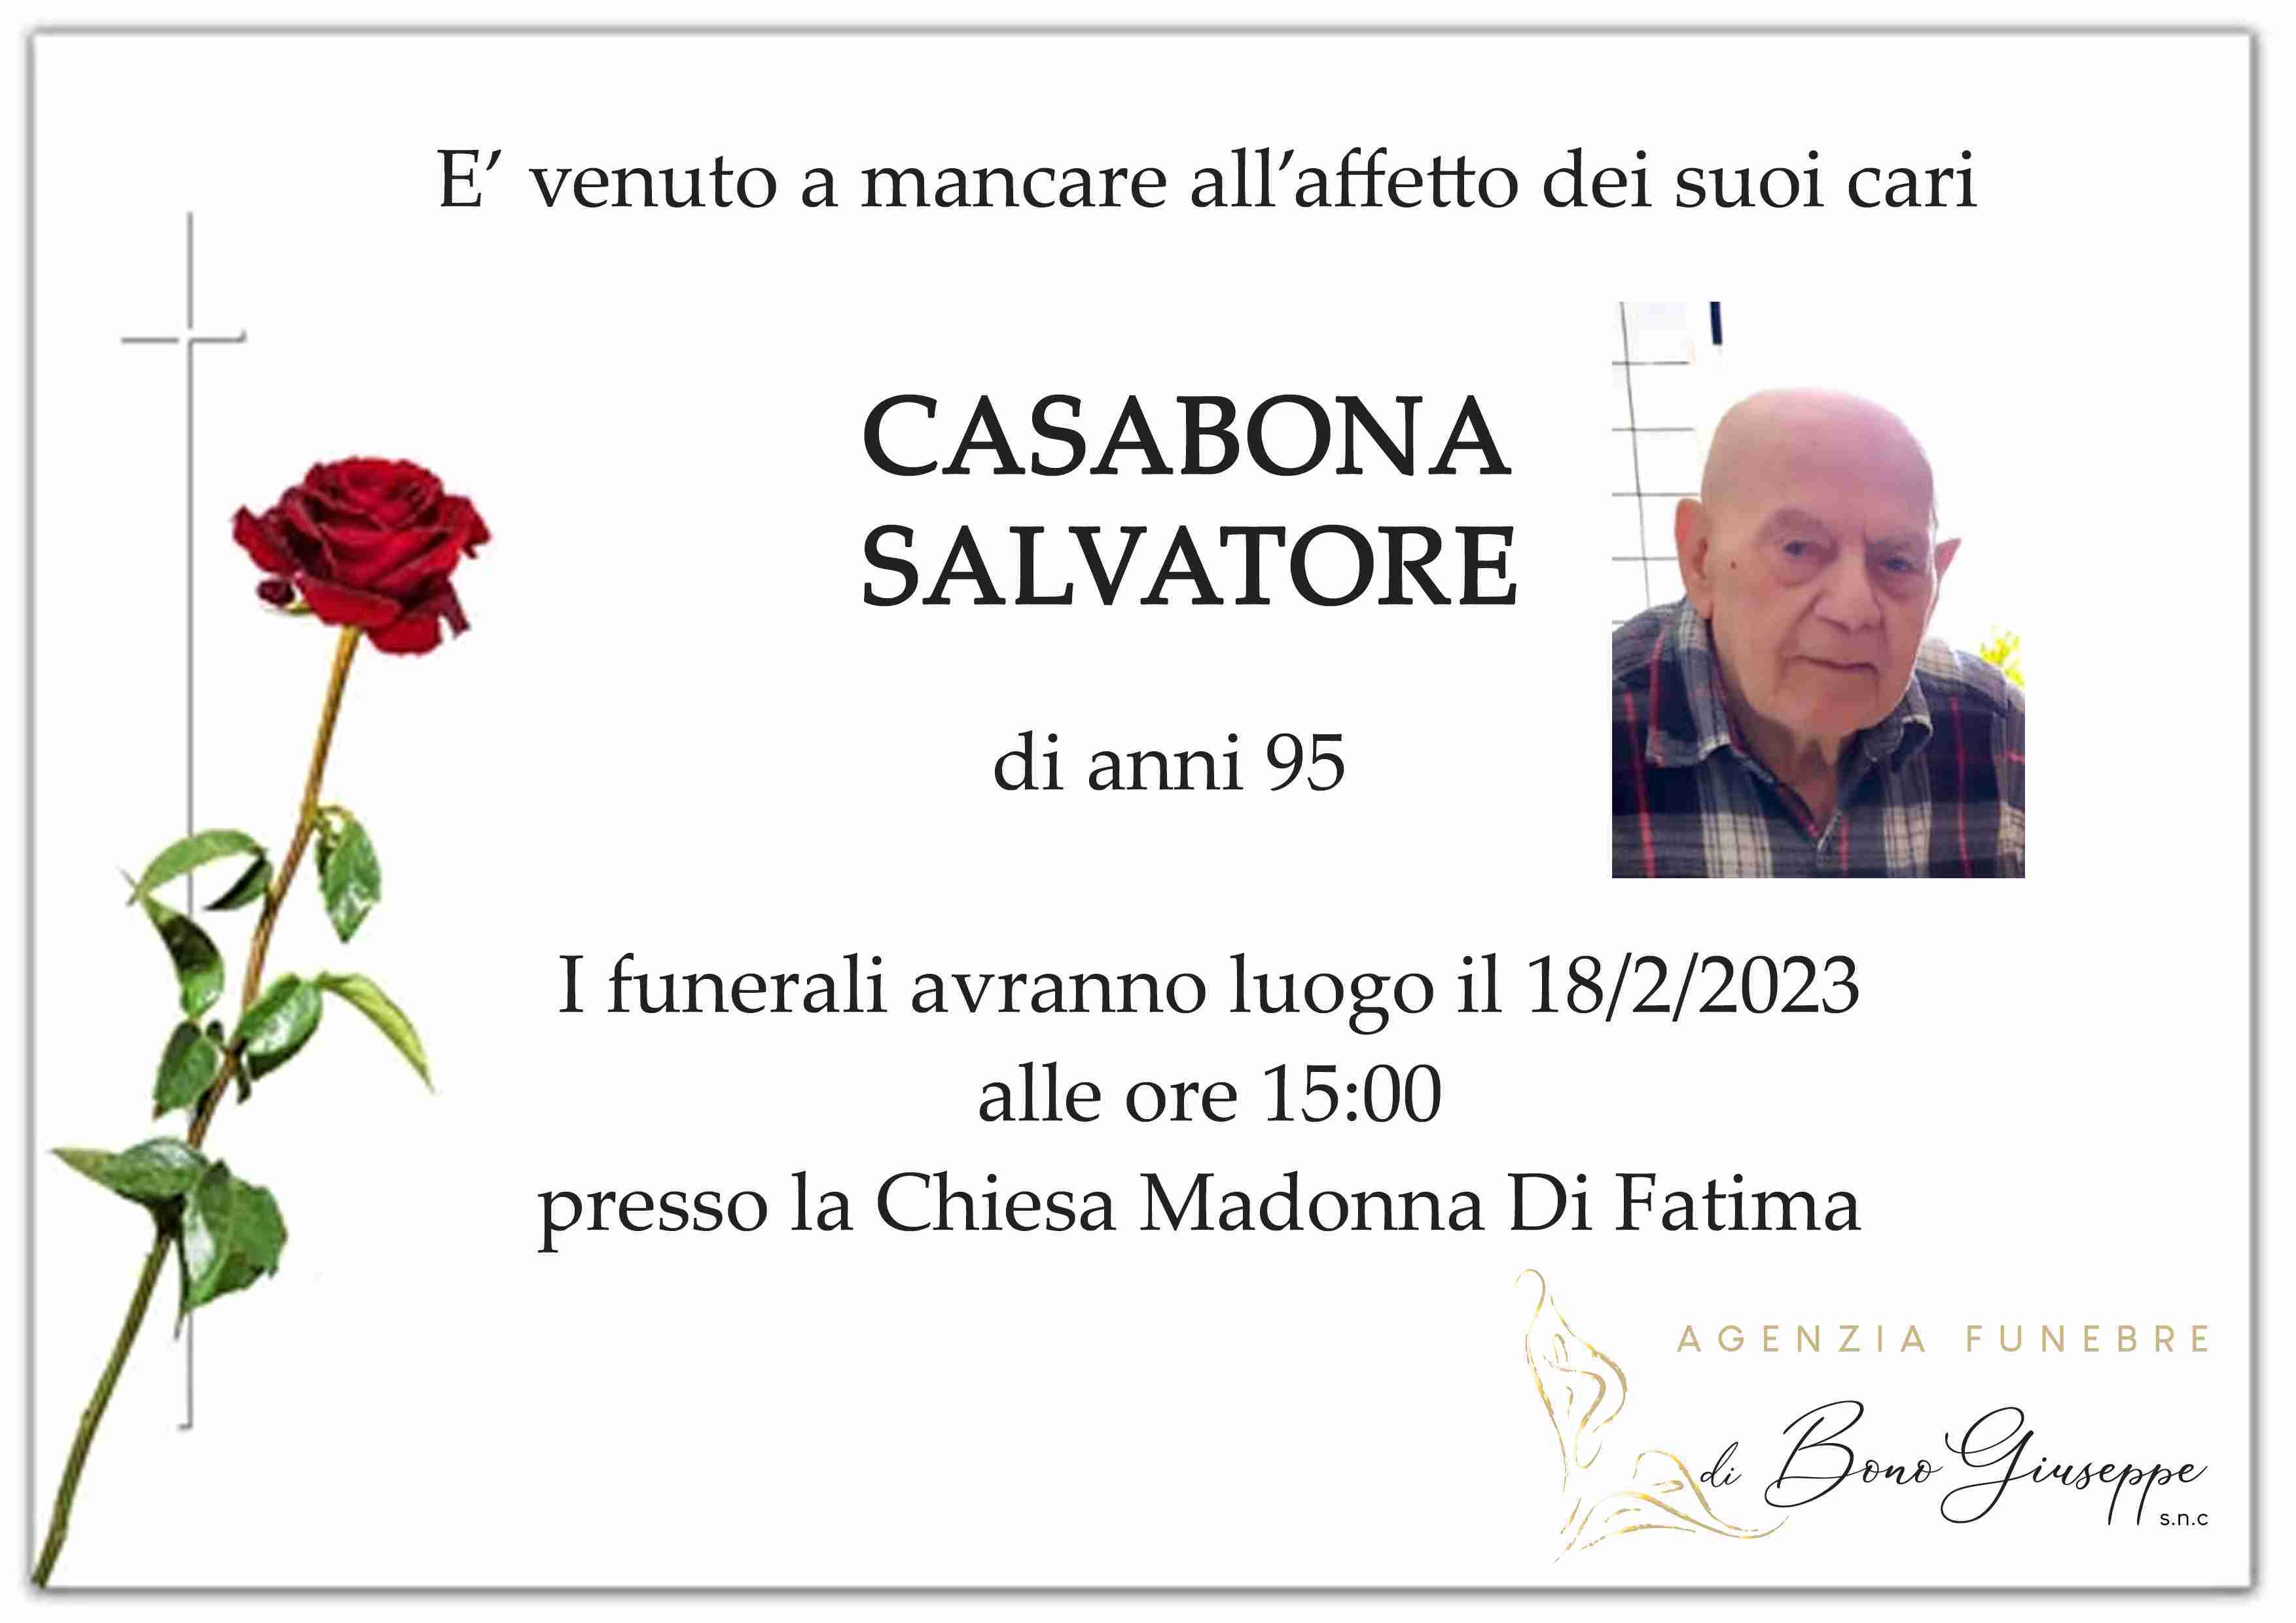 Salvatore Casabona